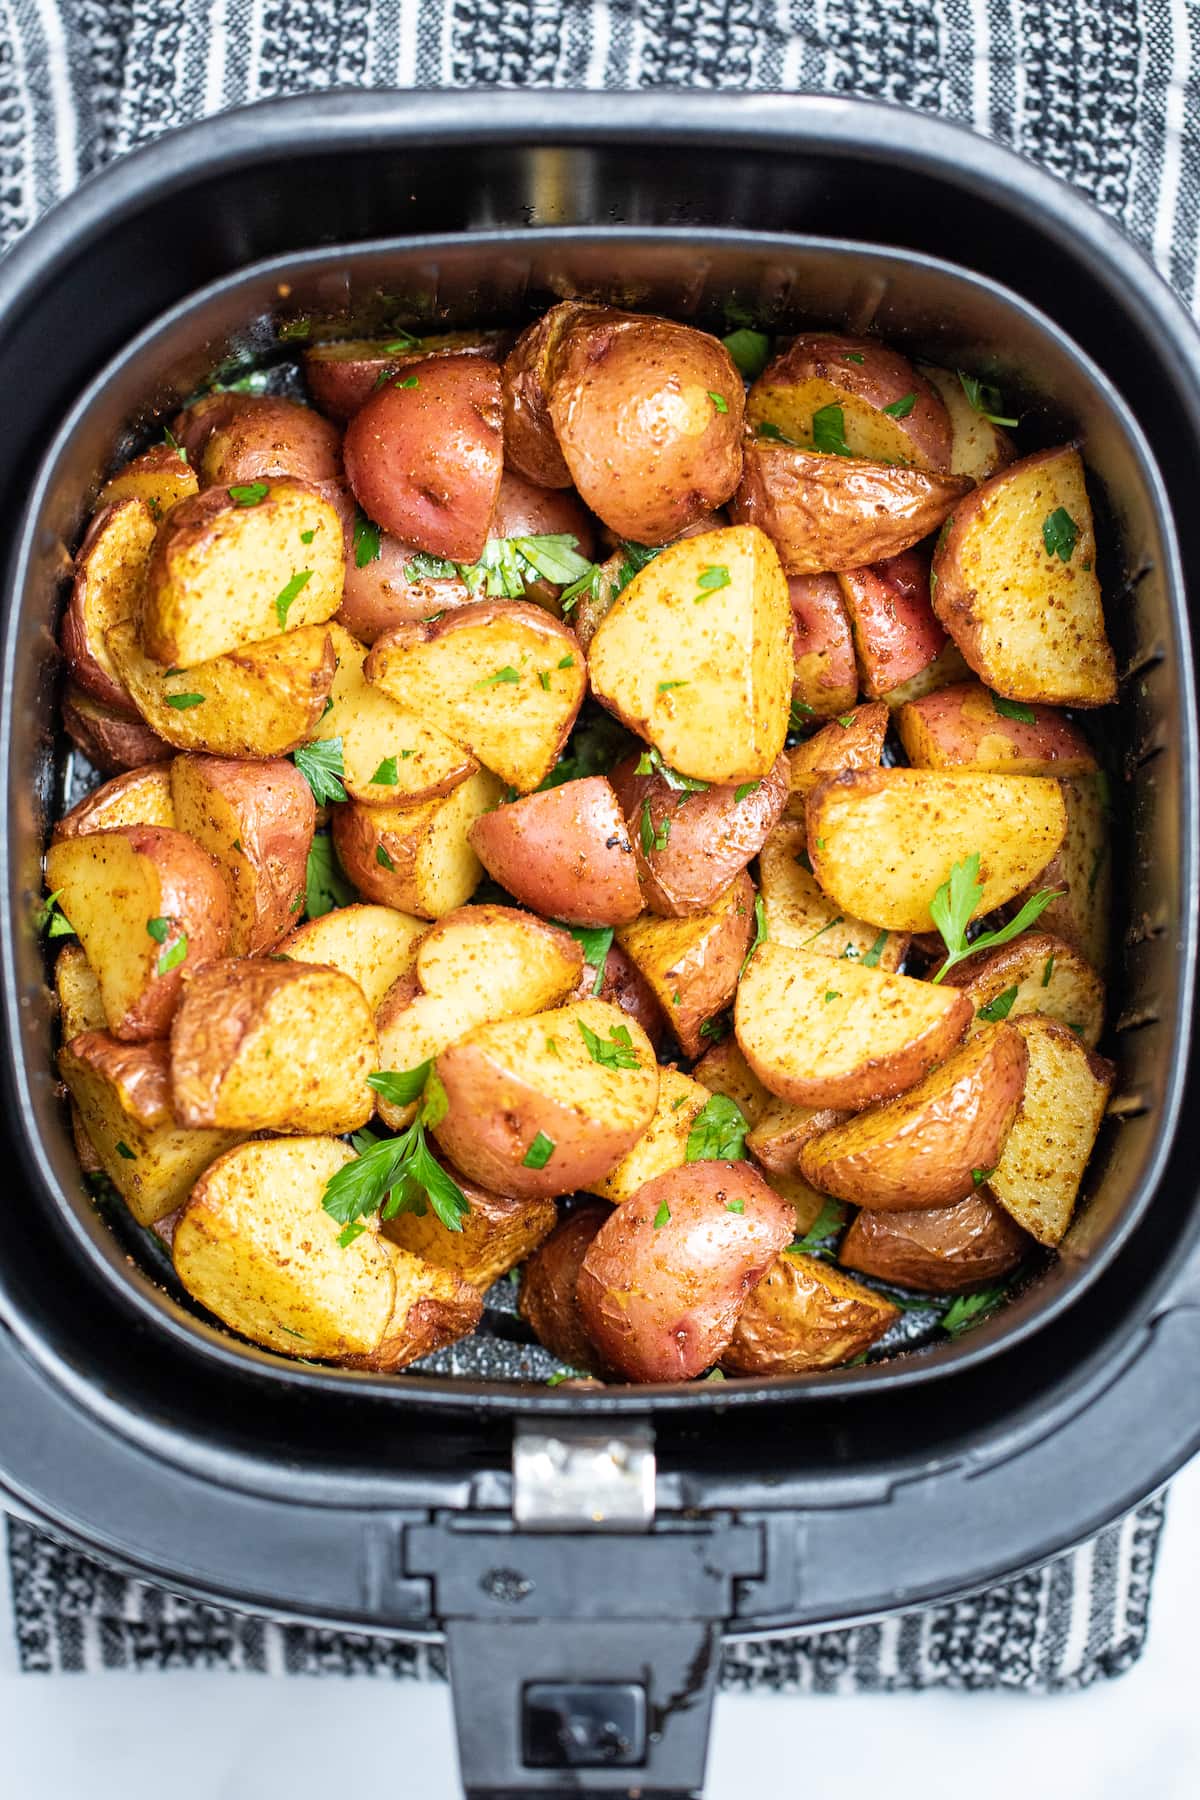 Air fryer basket full of red potatoes.